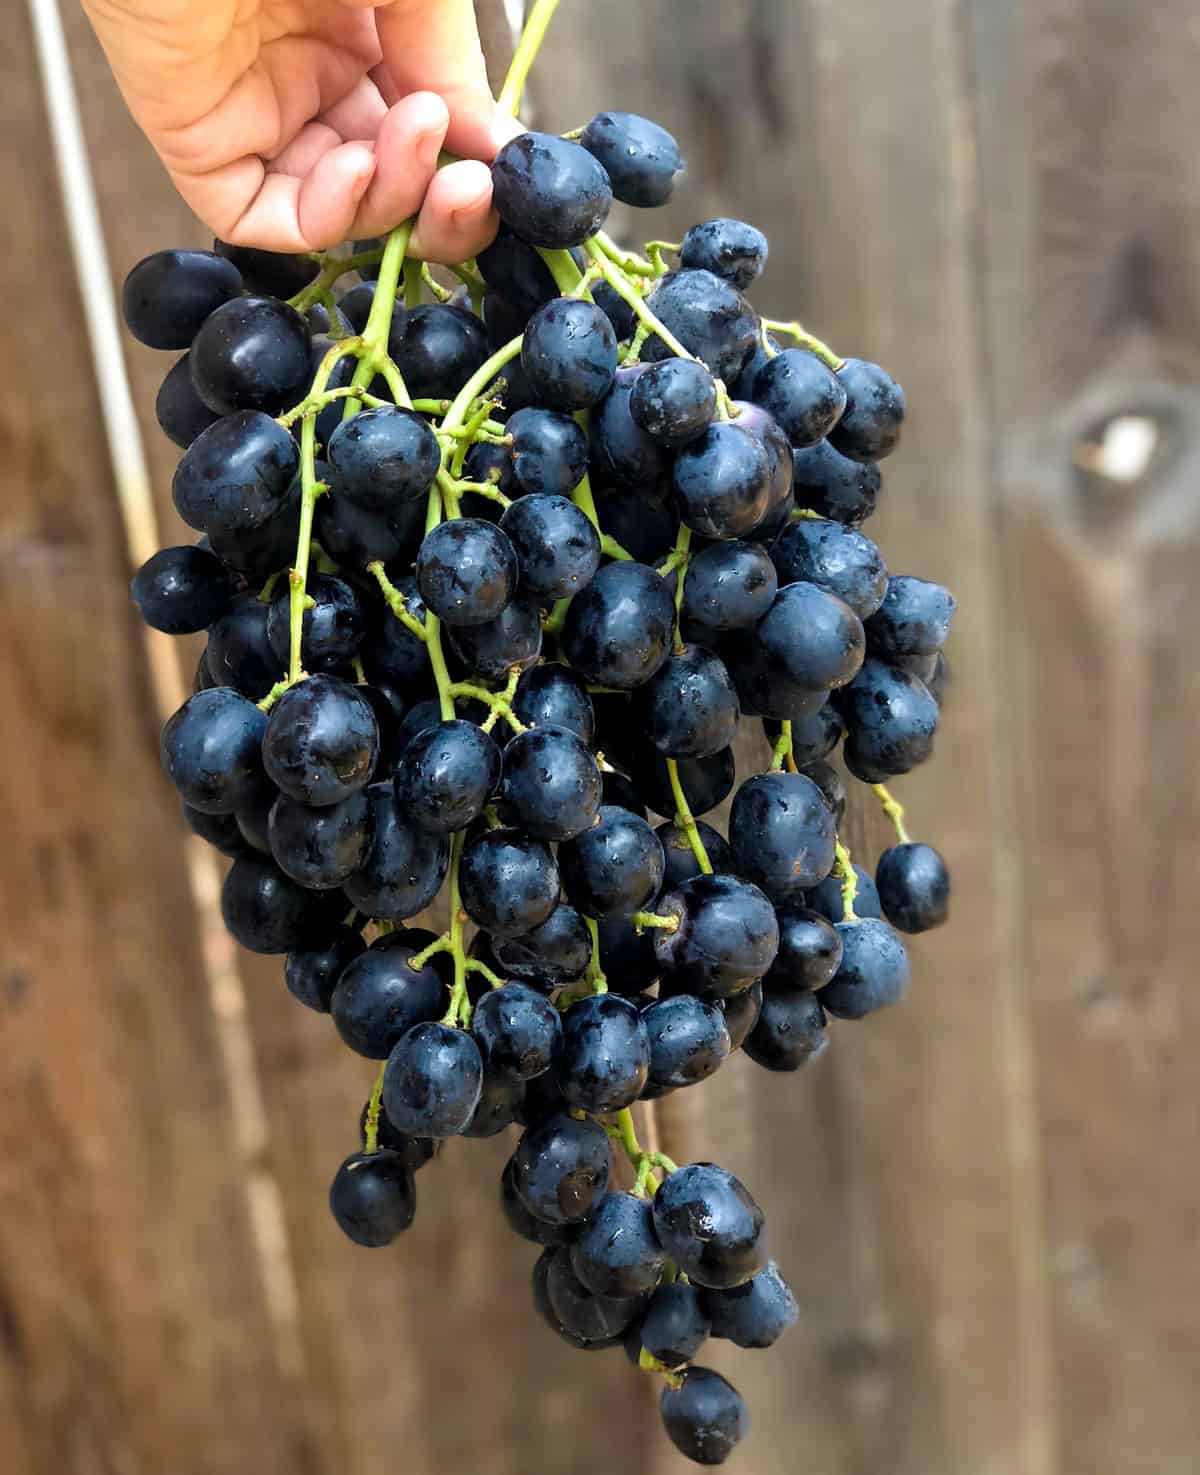 California grapes